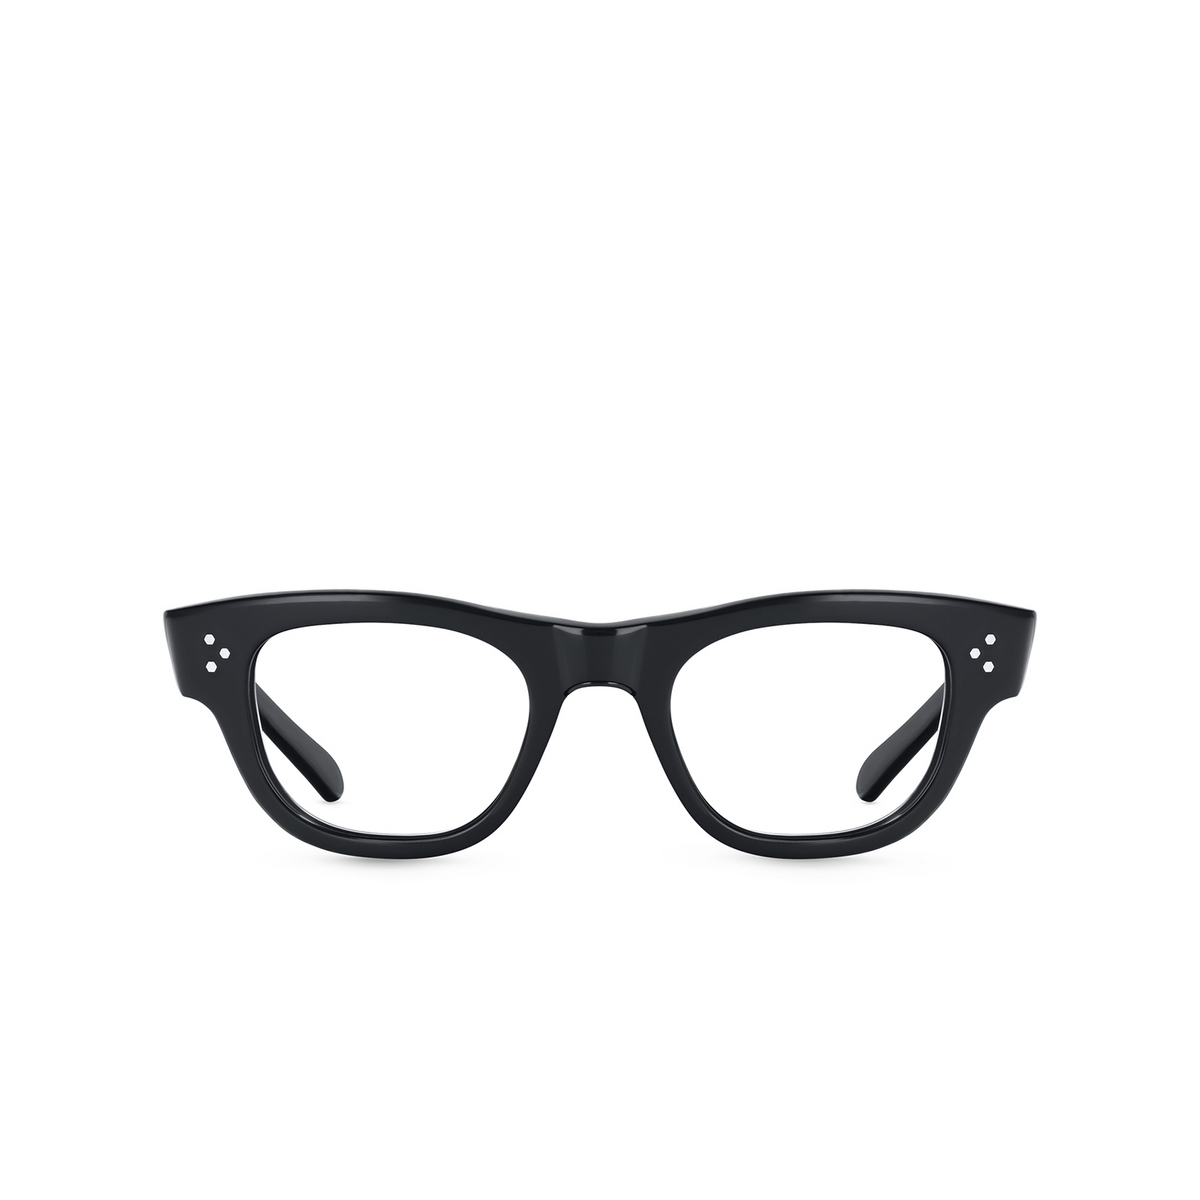 Mr. Leight WAIMEA C Eyeglasses BKGLSS-SBK Black Glass-Shiny Black - front view